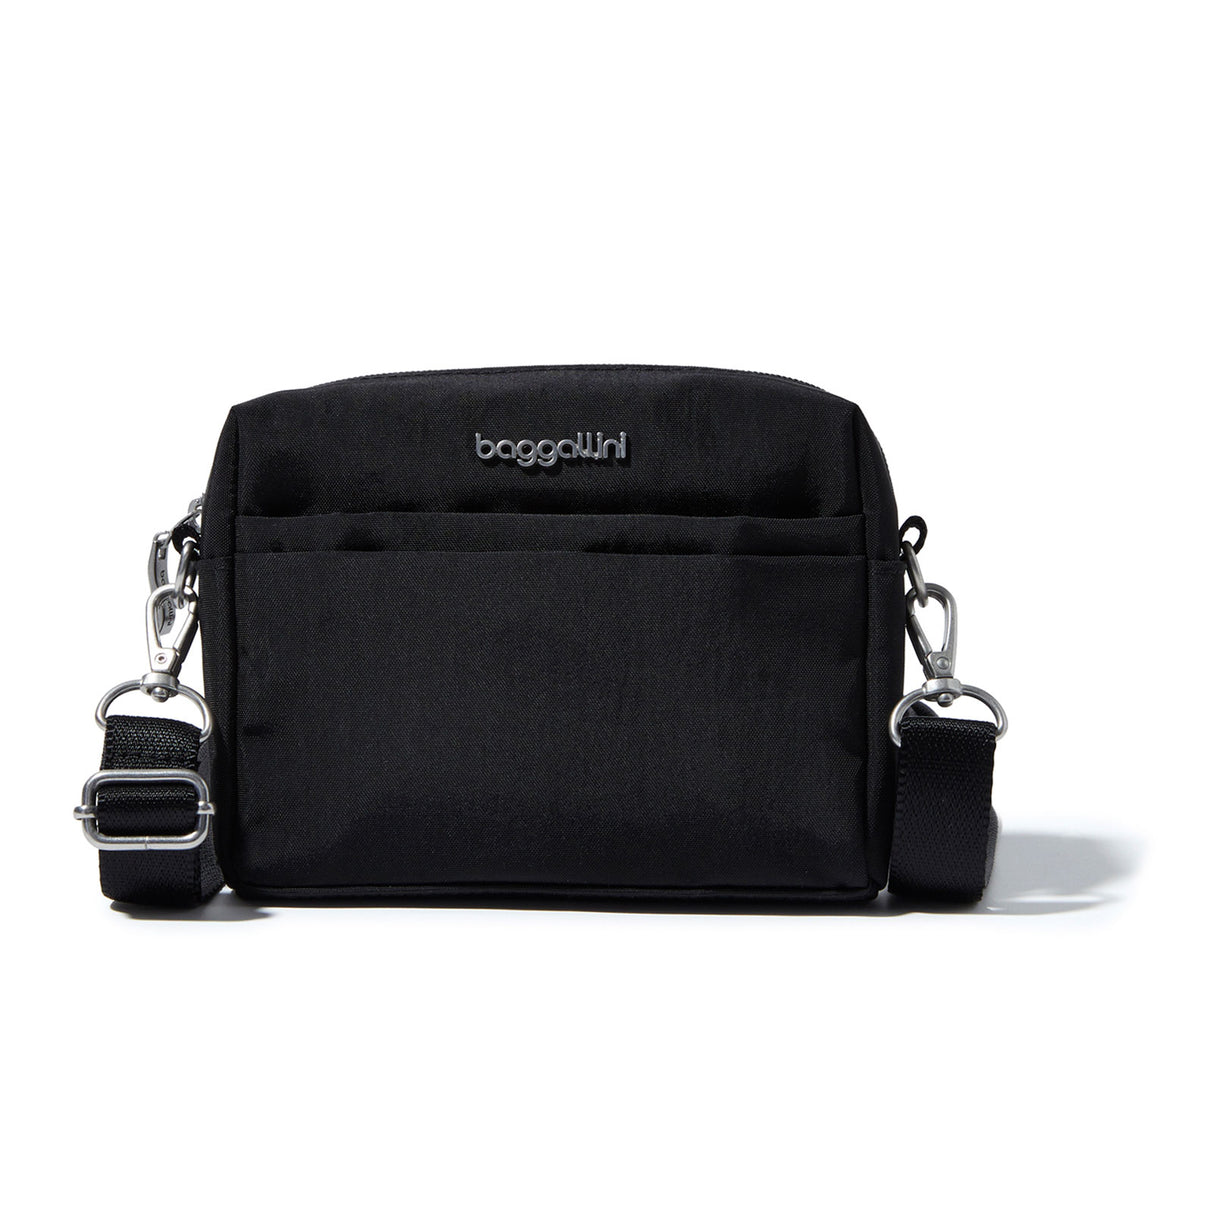 Baggallini 2-in-1 Convertible Belt Bag - Black Accessories - Bags - Handbags - The Heel Shoe Fitters